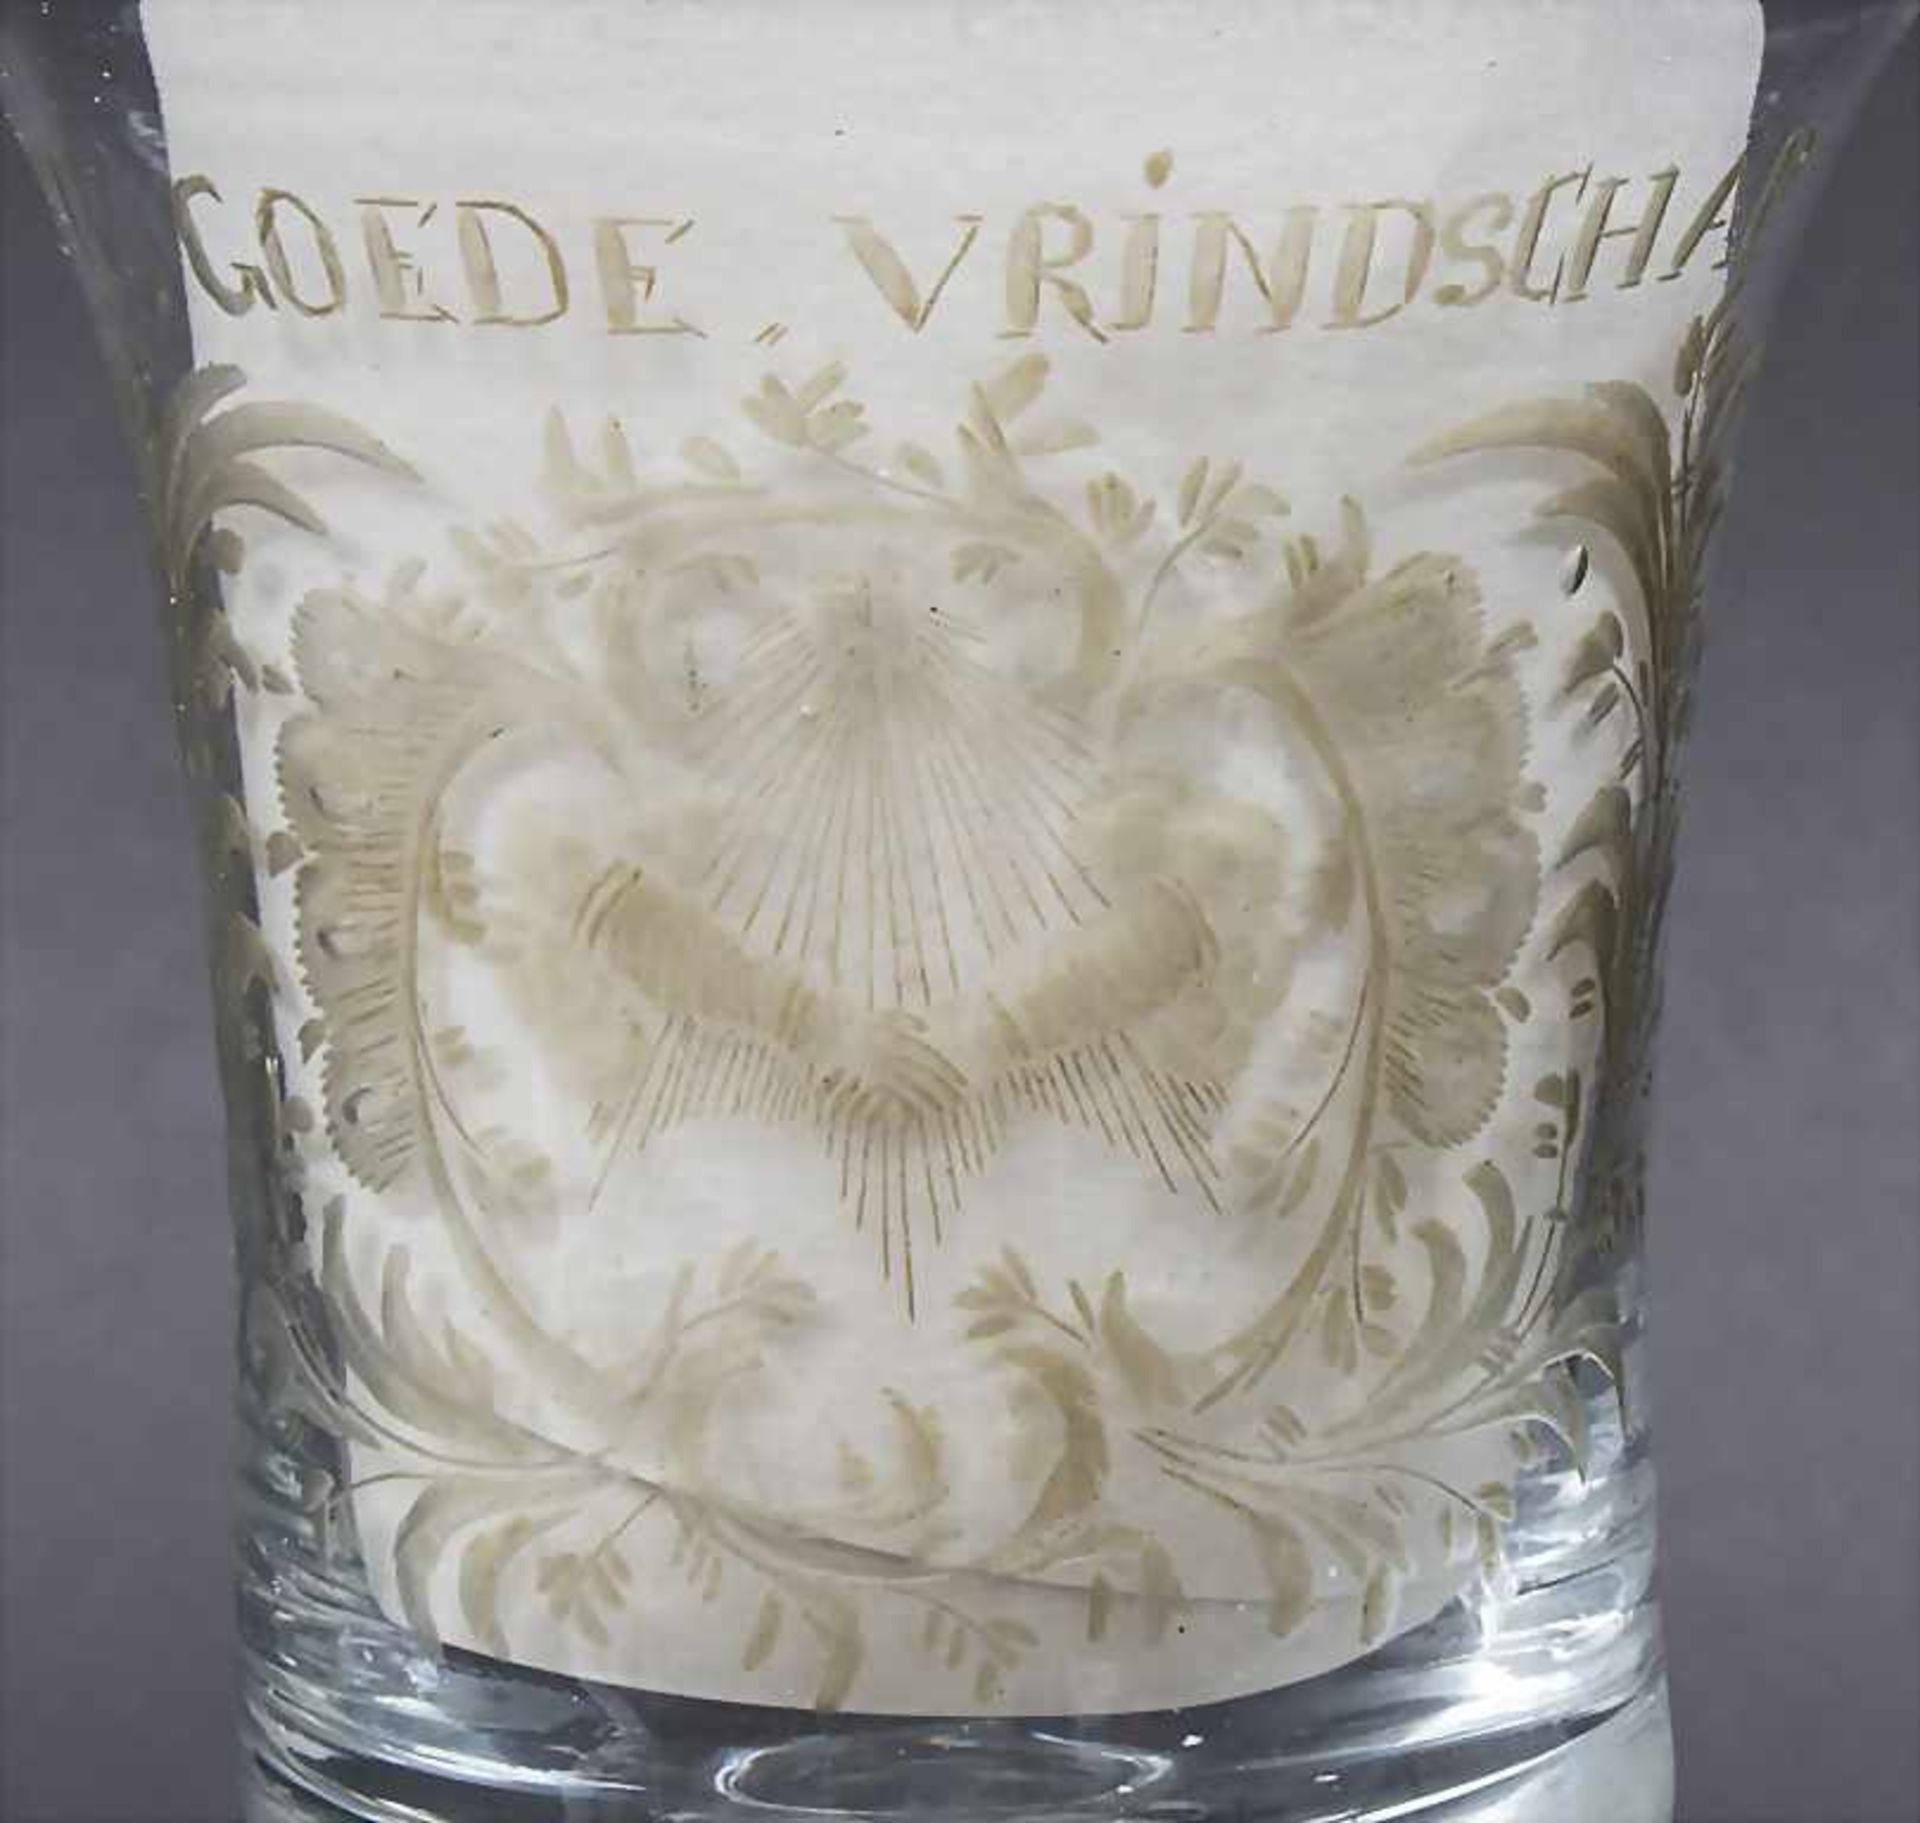 Freundschaftsglas / Noppenglas / Weinpokal / A friendship glass cup, 'DE GOEDE VRiNDSCHAP', Nied - Bild 2 aus 2